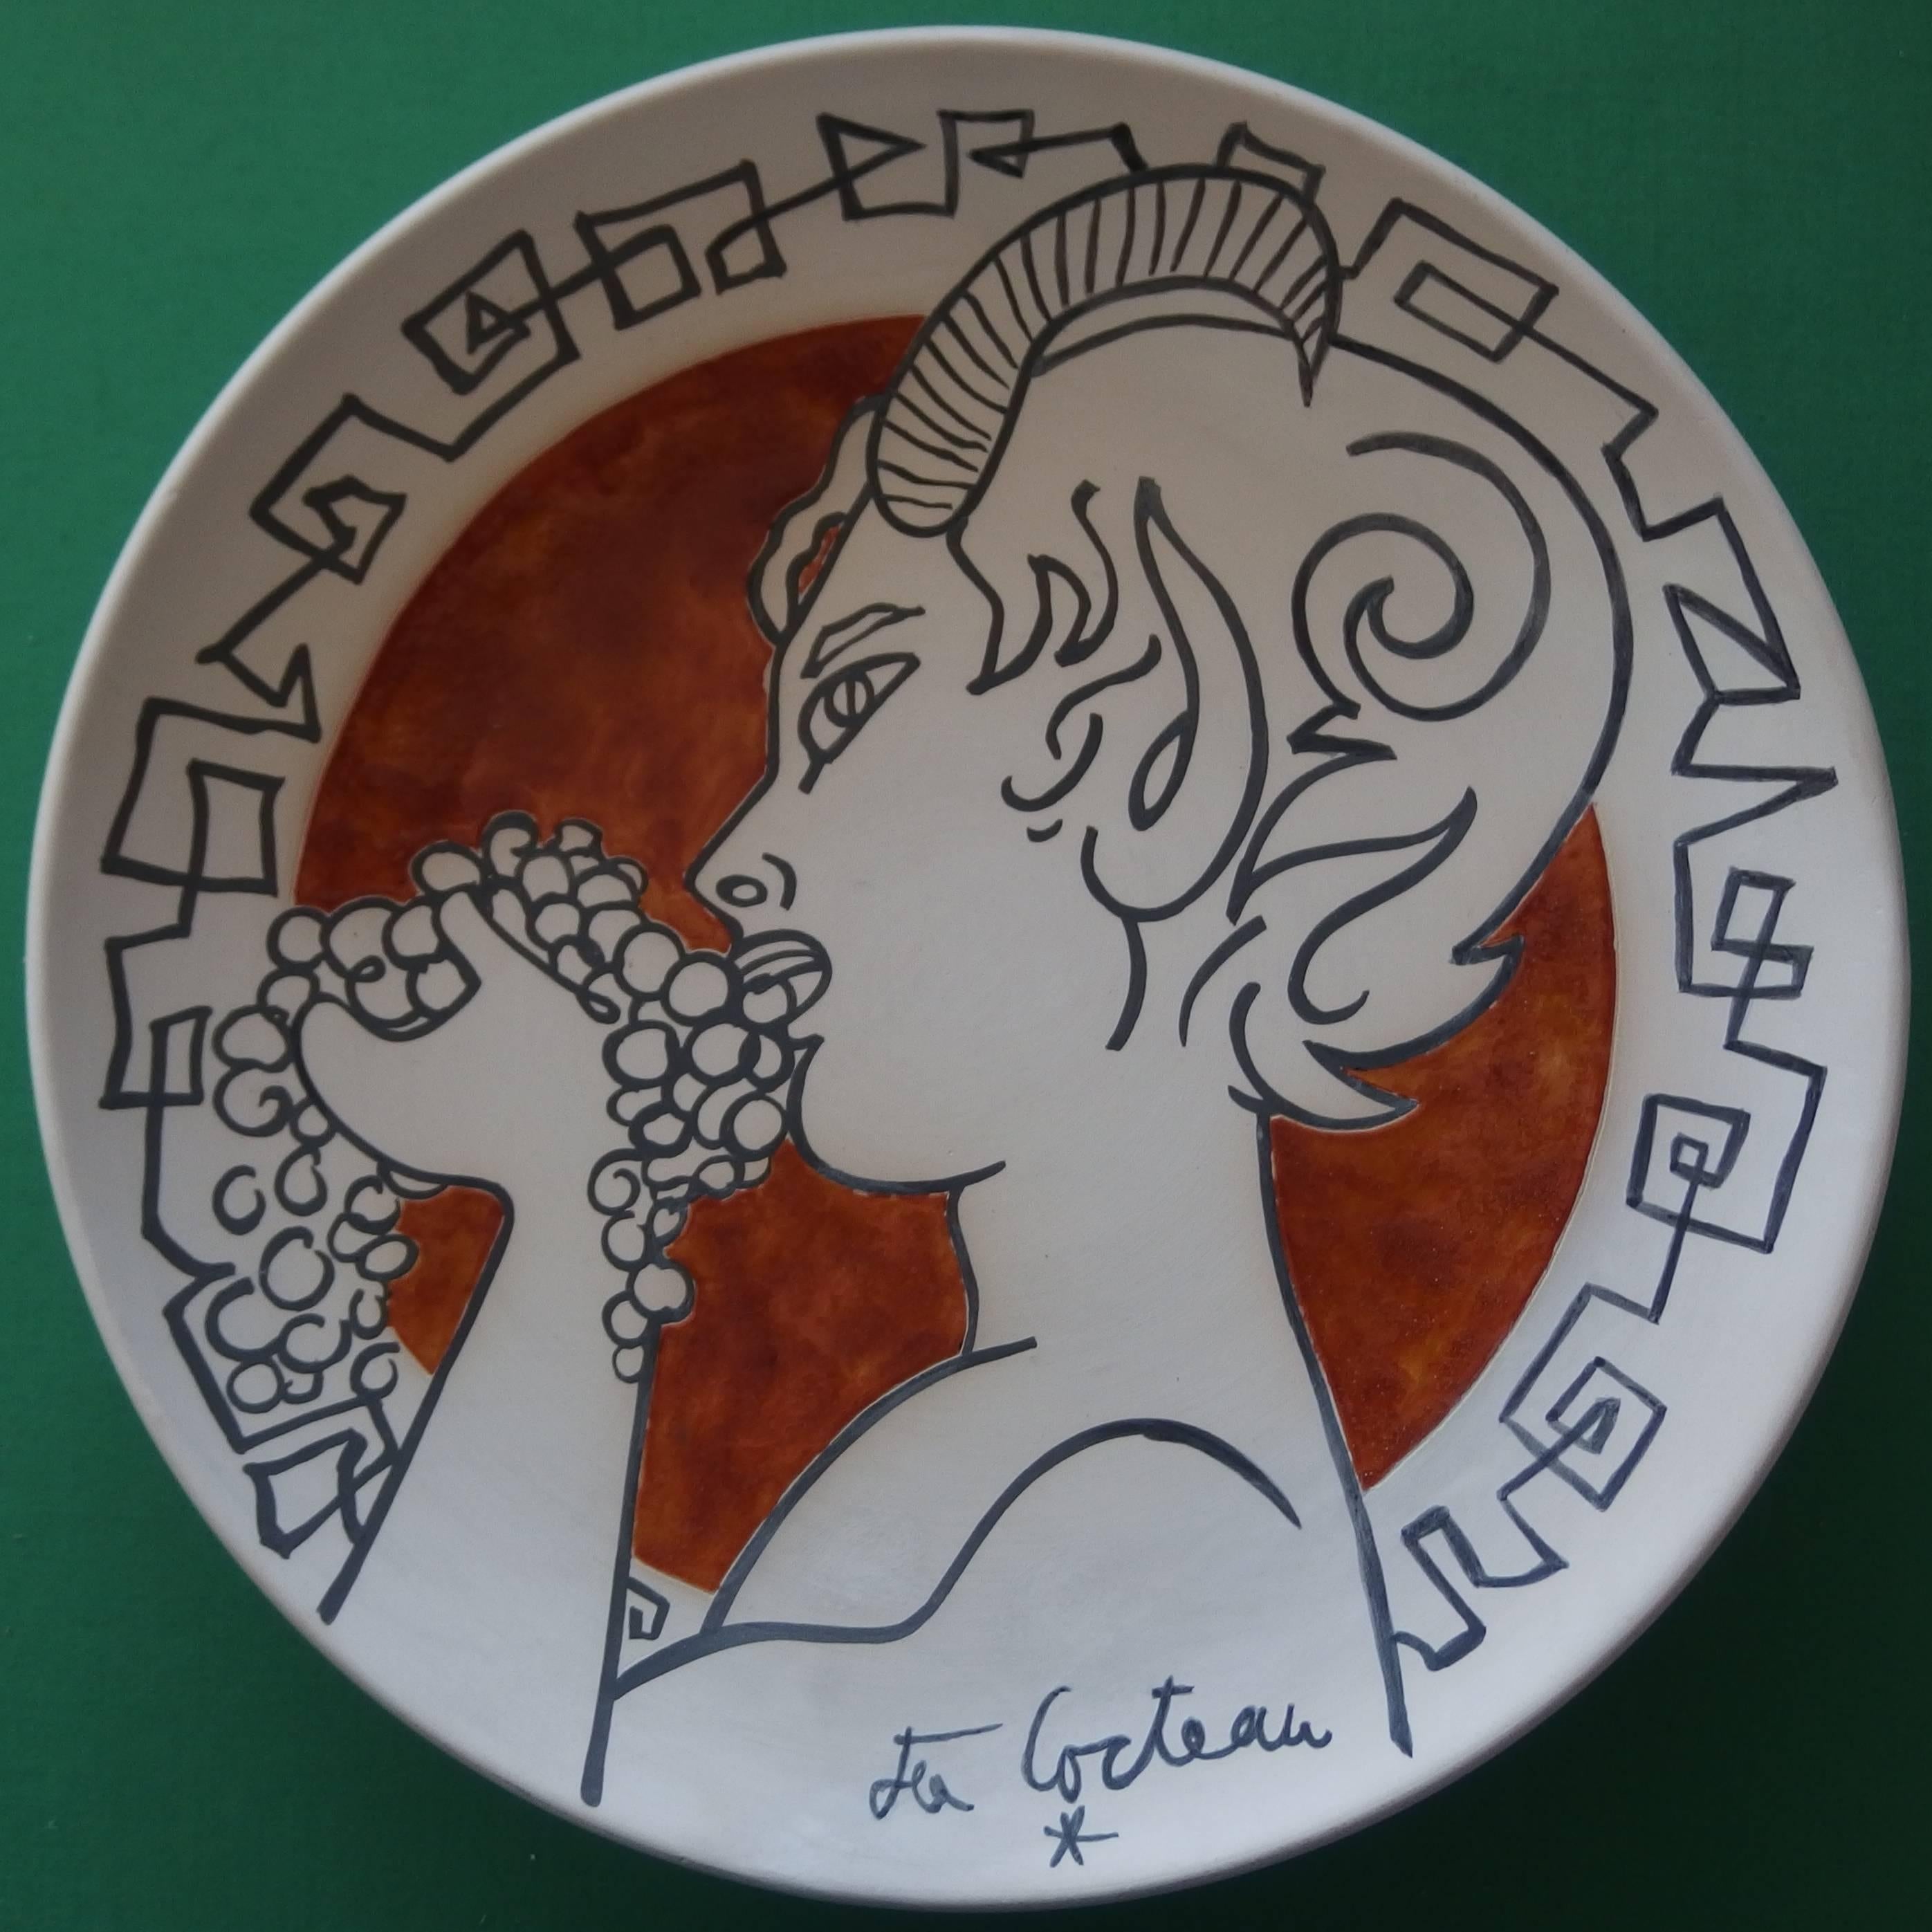 Jean Cocteau Figurative Sculpture - Faun Eating Grappes - Tall original ceramic dish - Signed, Ltd 15 copies